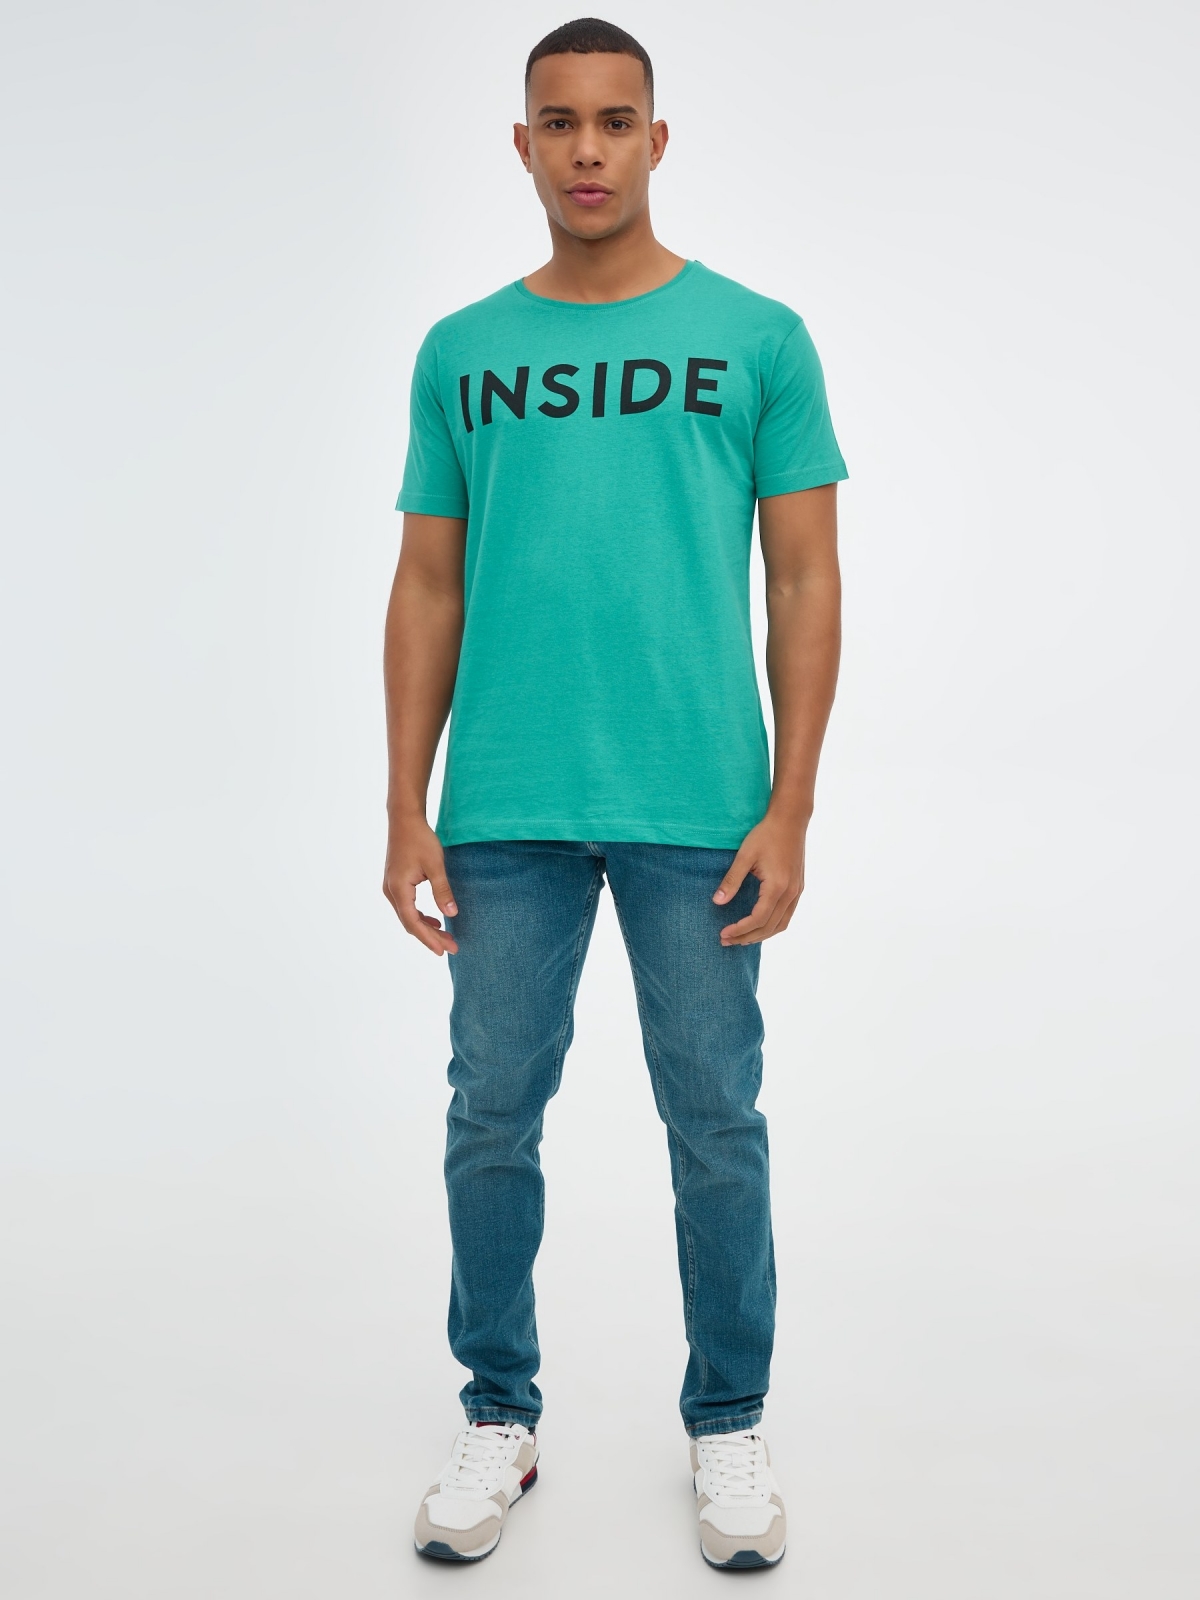 Camiseta básica "INSIDE" verde agua vista general frontal